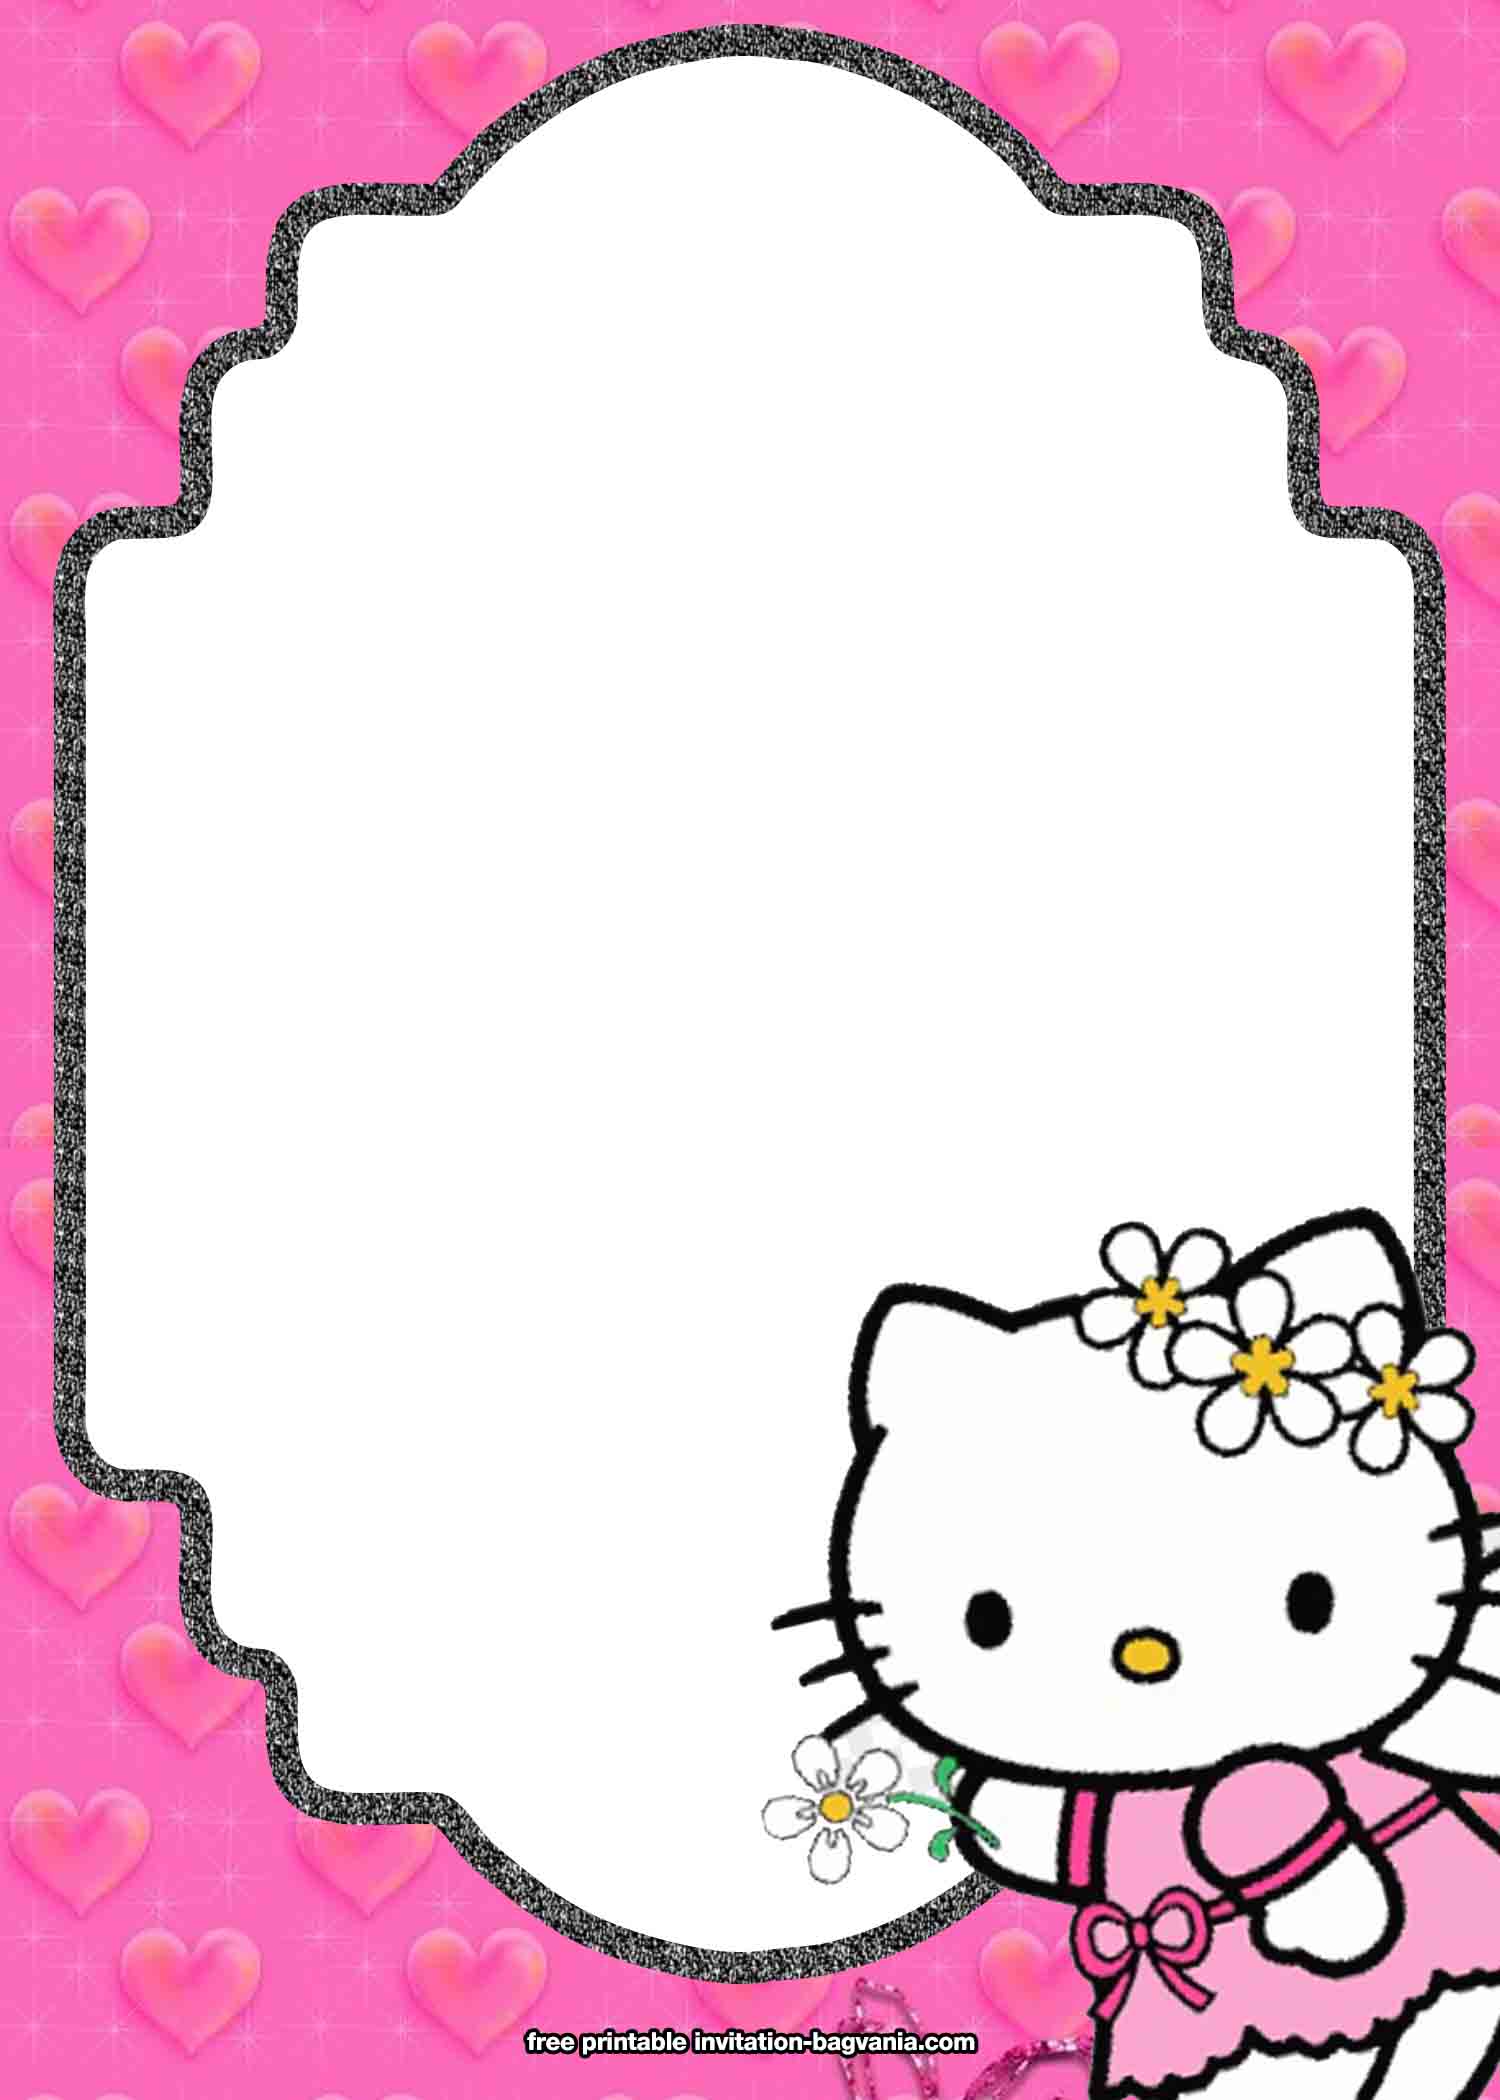 10+ FREE Personalized Hello Kitty Invitation Templates | FREE Printable